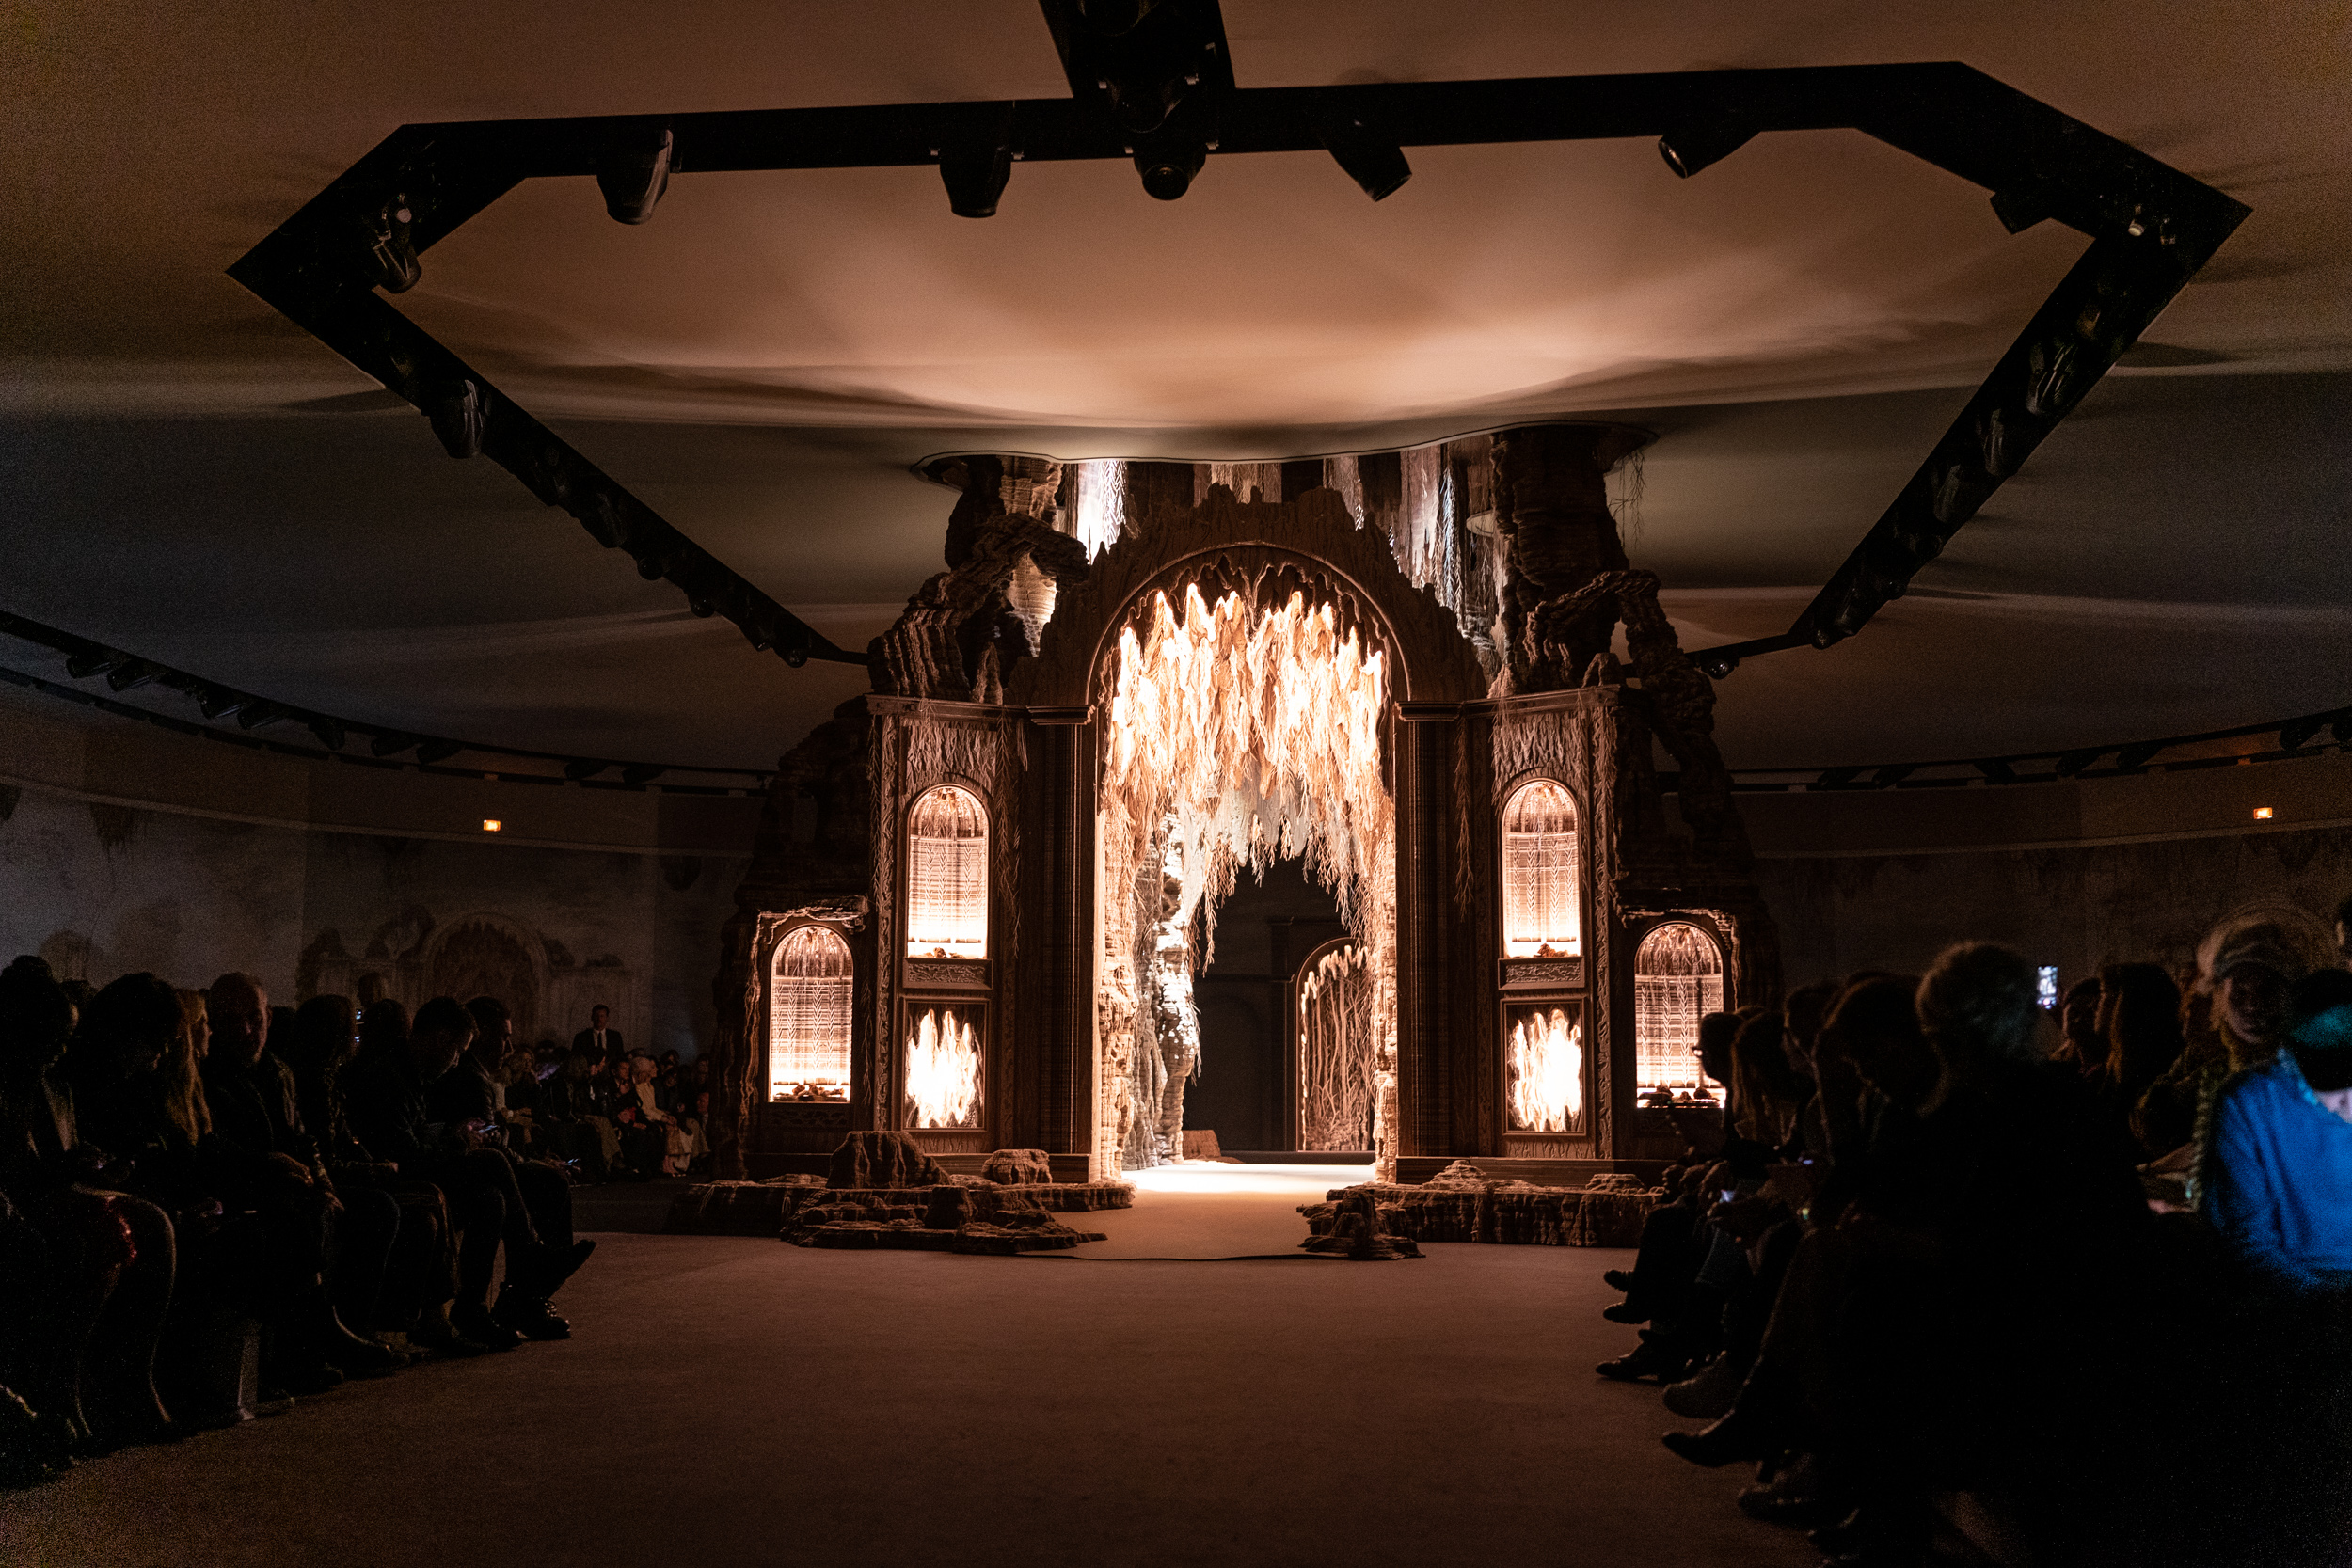 Christian Dior Spring 2023 Fashion Show Atmosphere